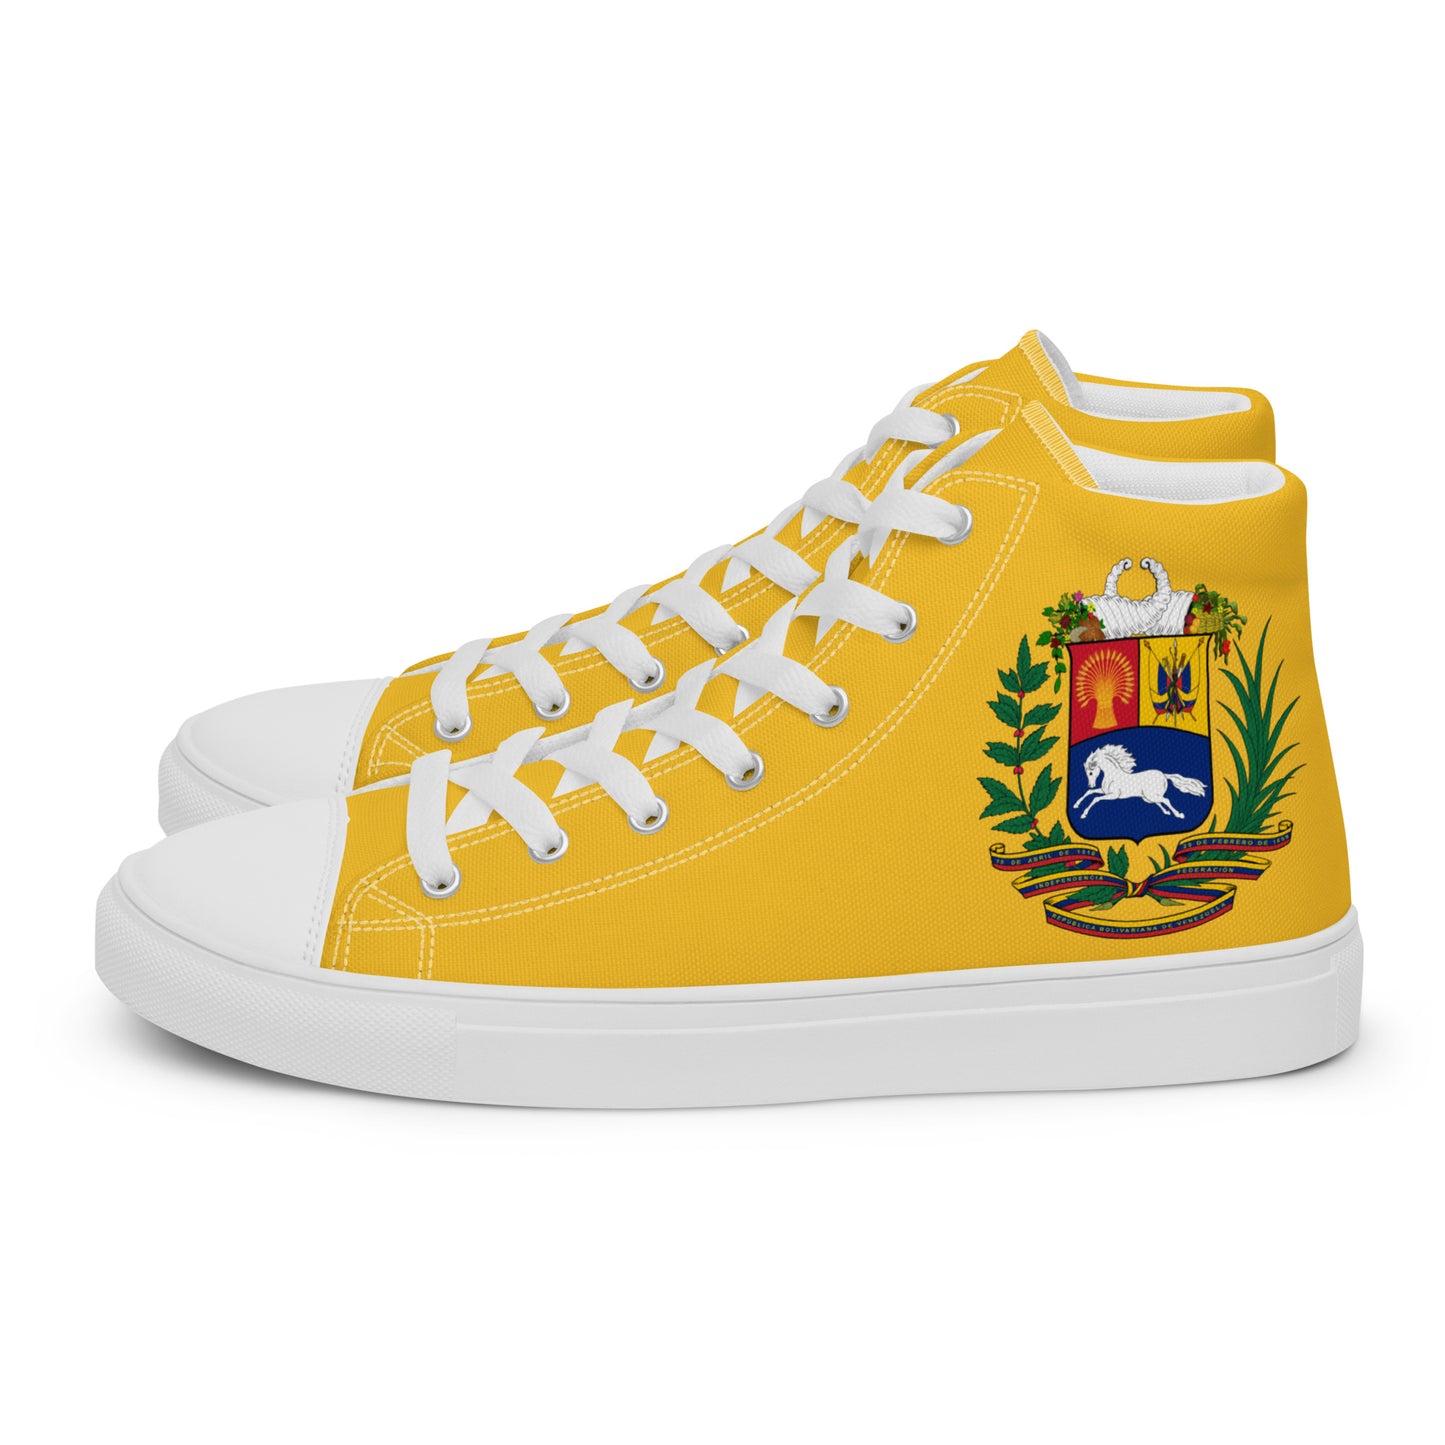 Venezuela - Men - Yellow - High top shoes